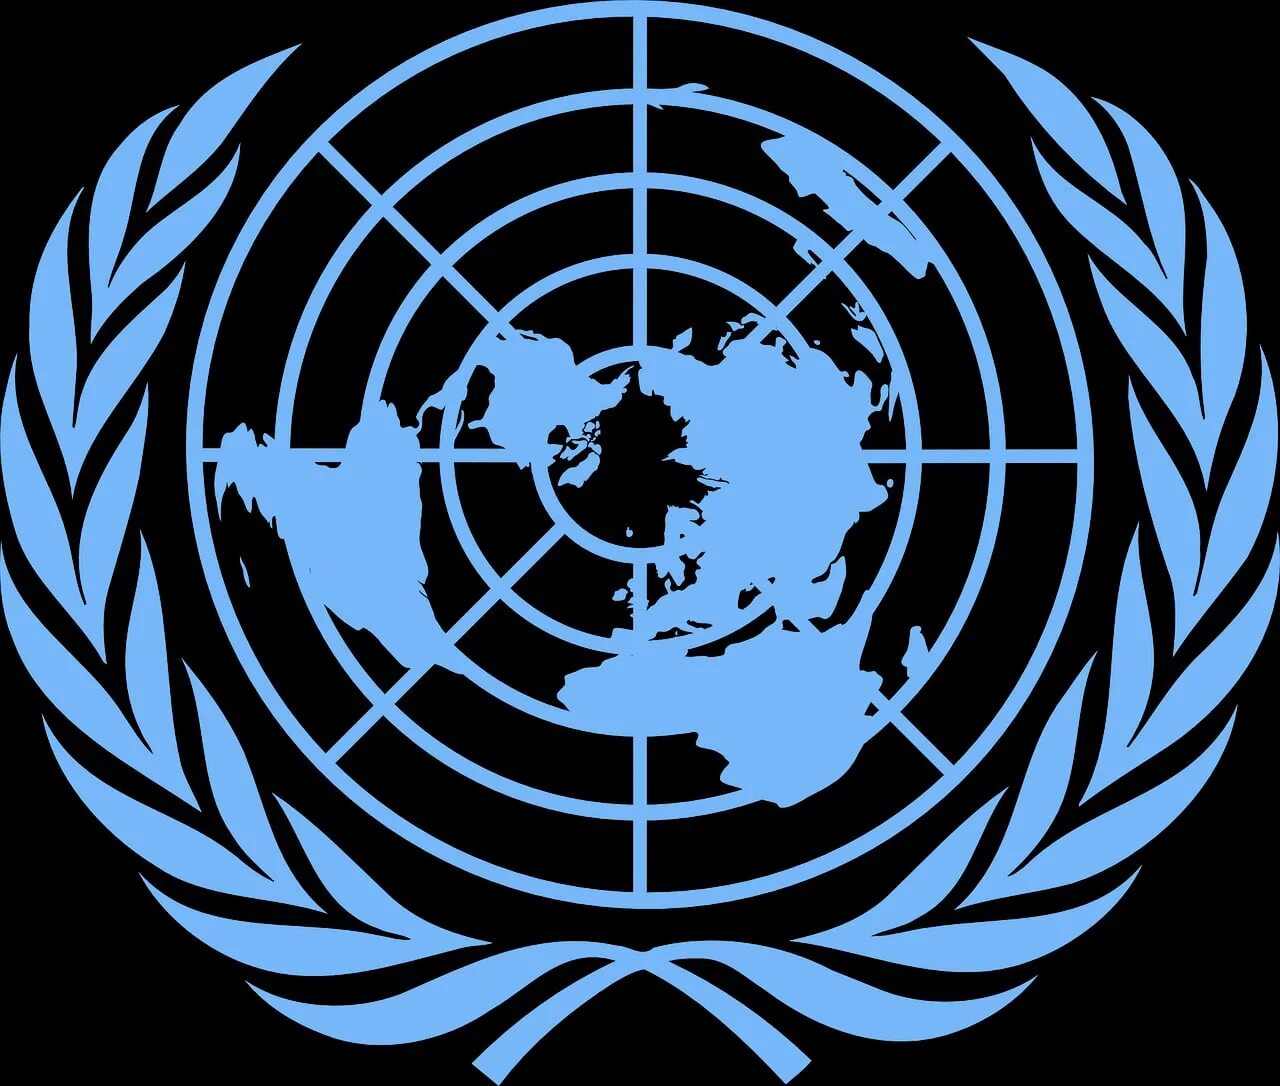 Оон без. ООН United Nations. Генеральная Ассамблея ООН логотип. Знак совета безопасности ООН. Совбез ООН знак.